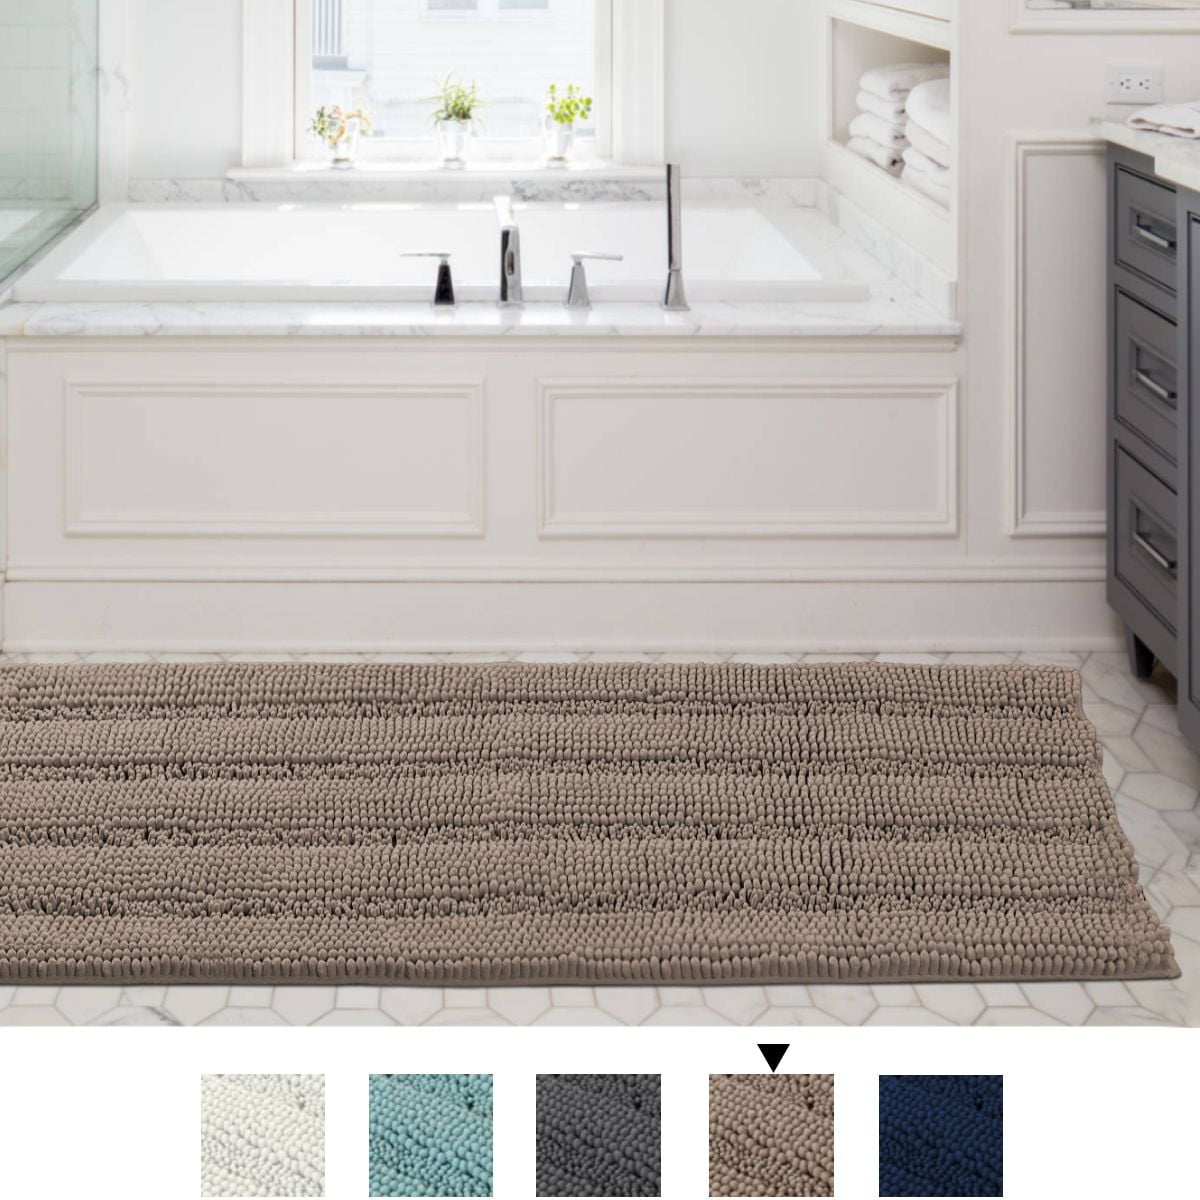 Details about   Non Slip Silver Grey Area Rugs Long Hallway Runner Carpet Rug Kitchen Floor Mats 